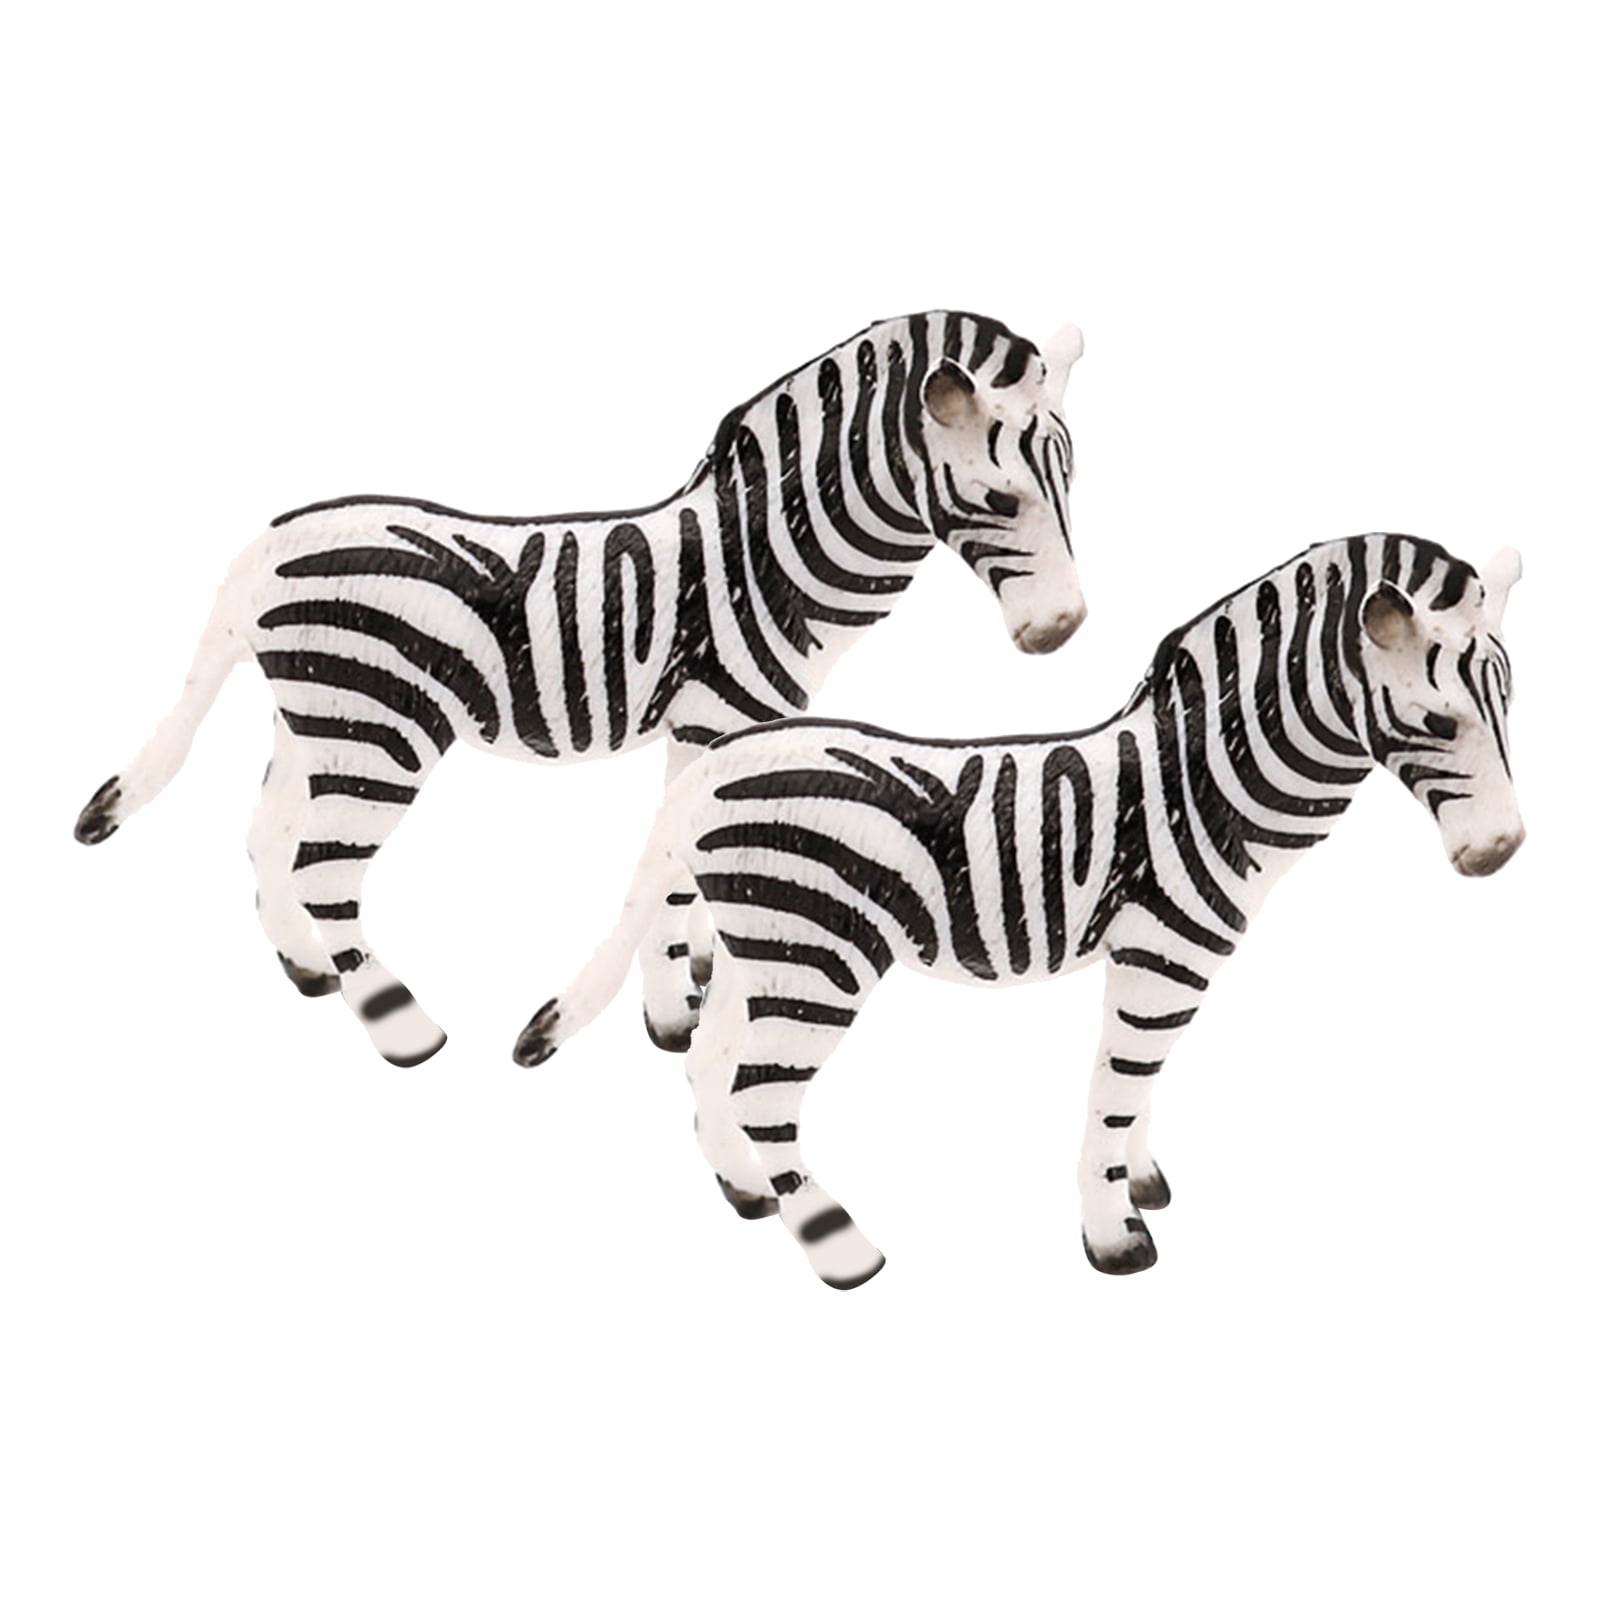 Lifelike Zebra Wildlife Animal Model Figure Boys Girls Educational Toy Gift 